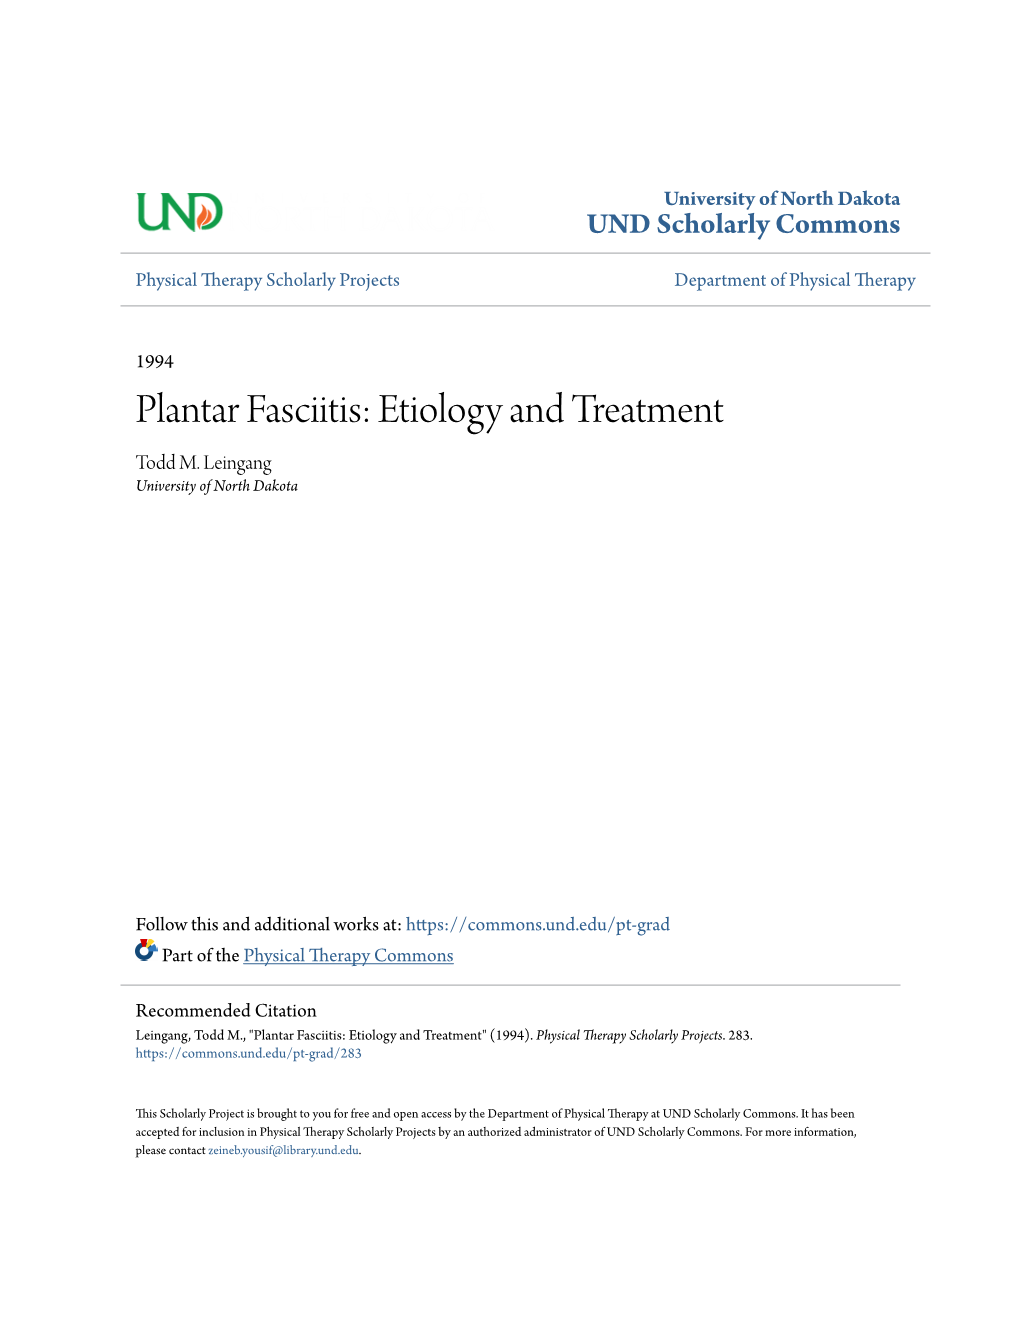 Plantar Fasciitis: Etiology and Treatment Todd M